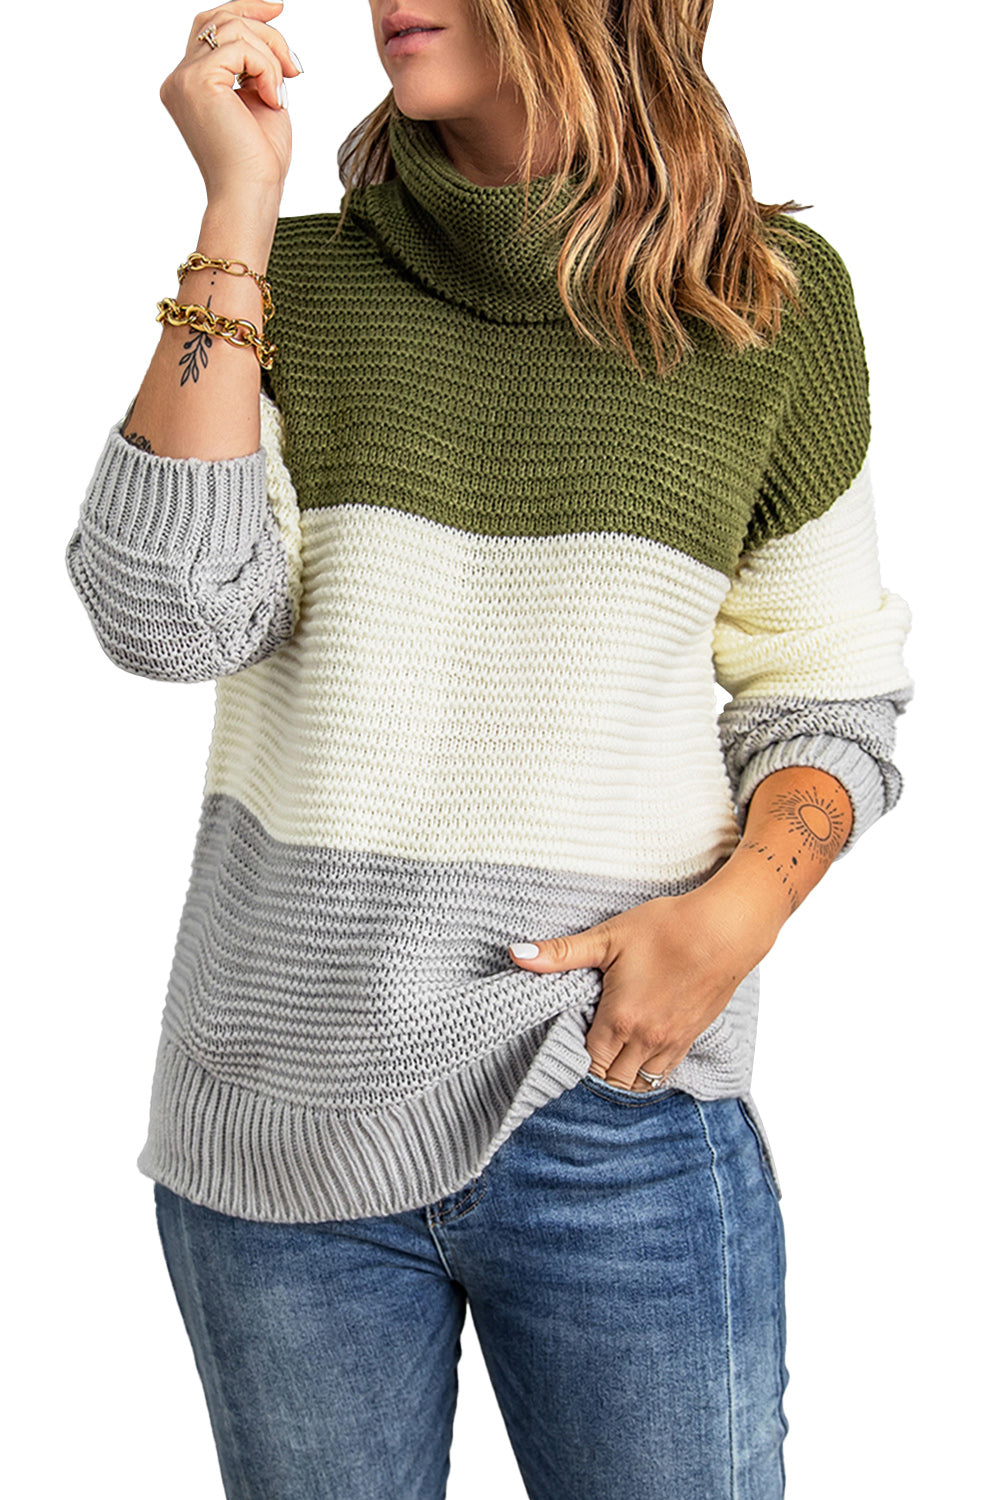 Green Turtleneck Color Block Pullover Sweater